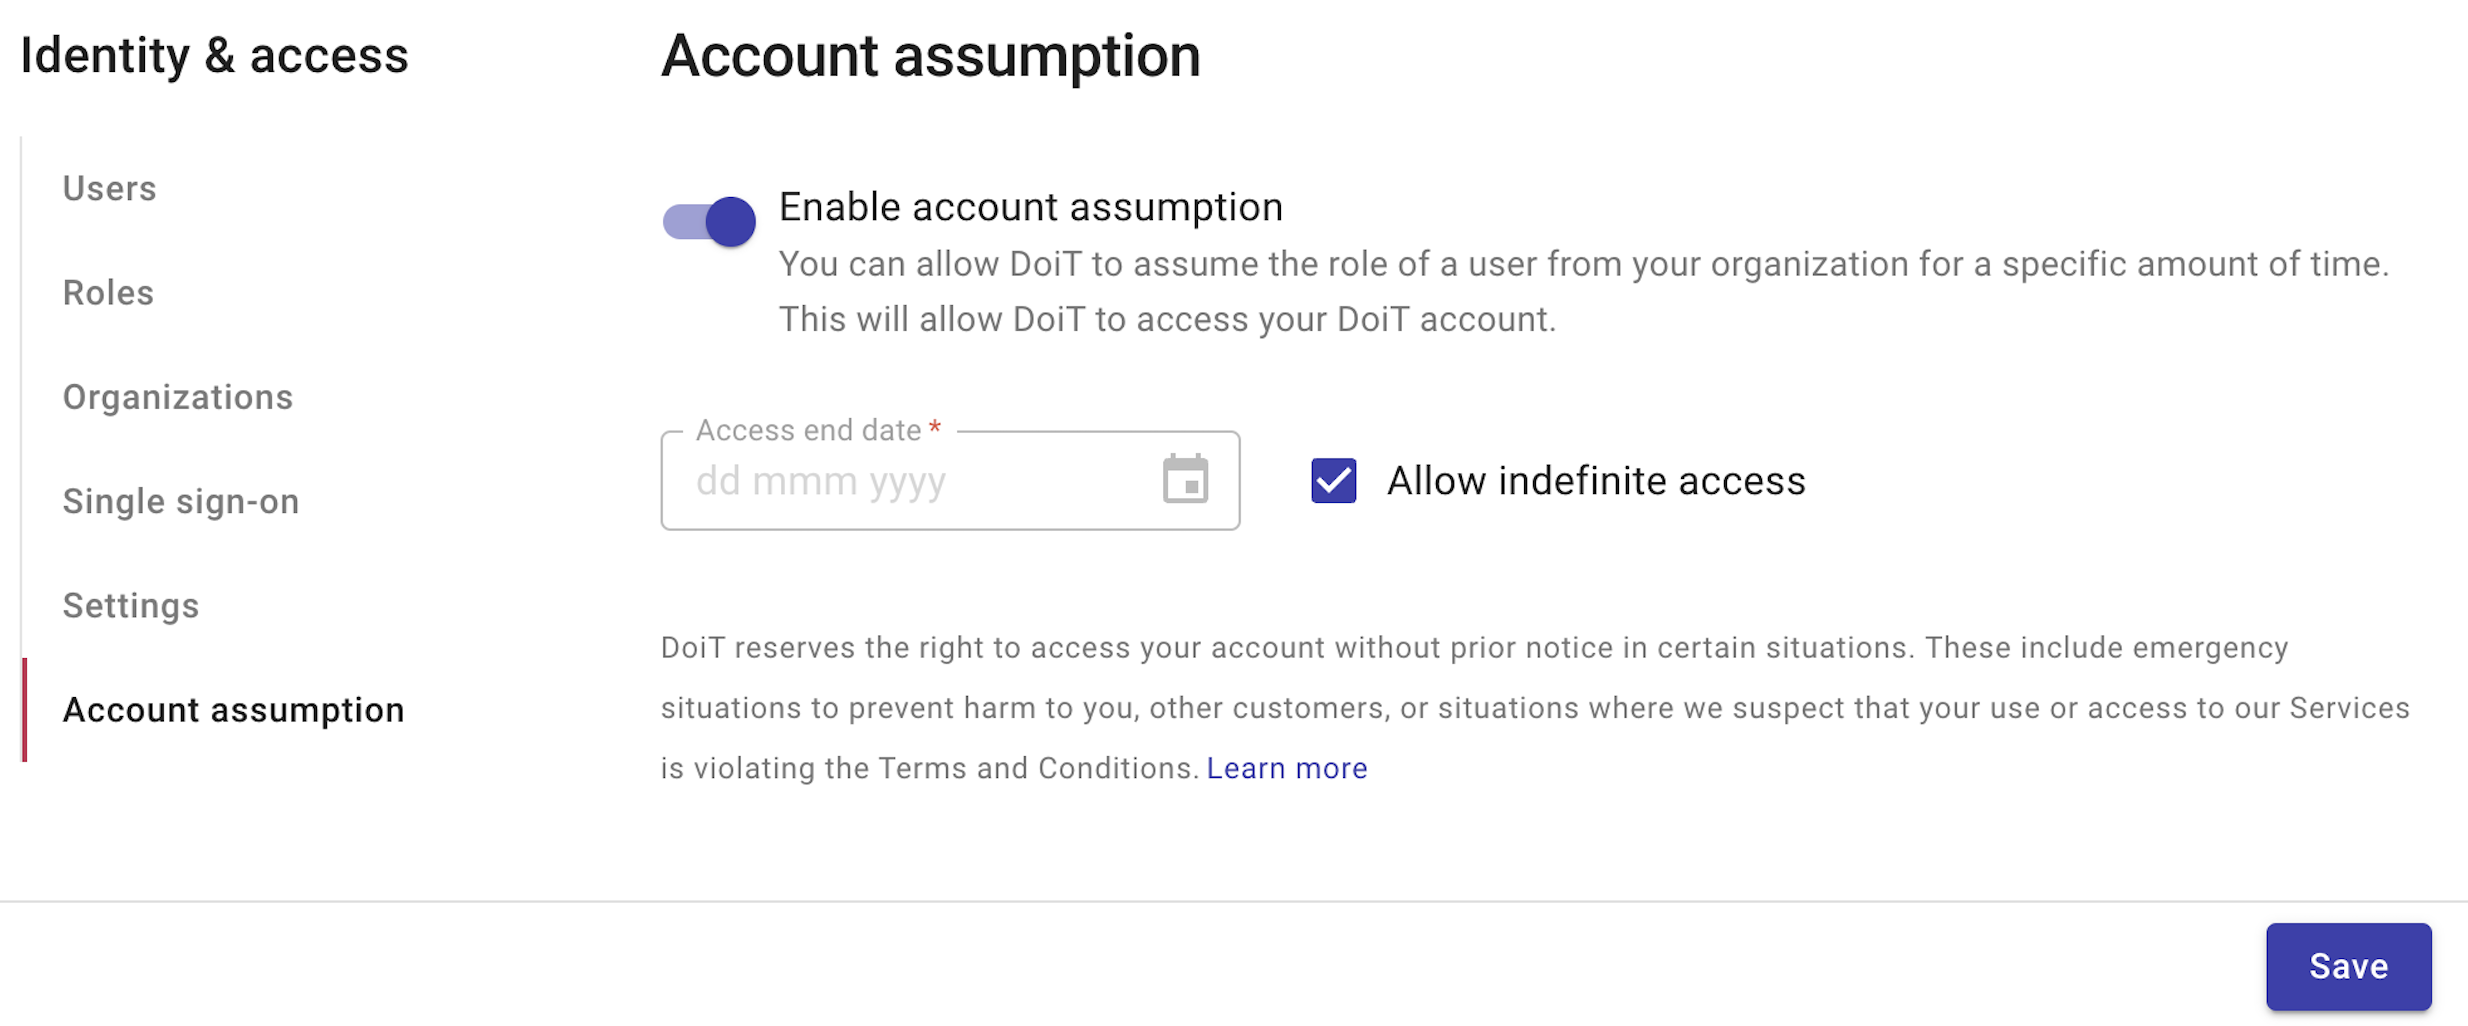 Account assumption settings